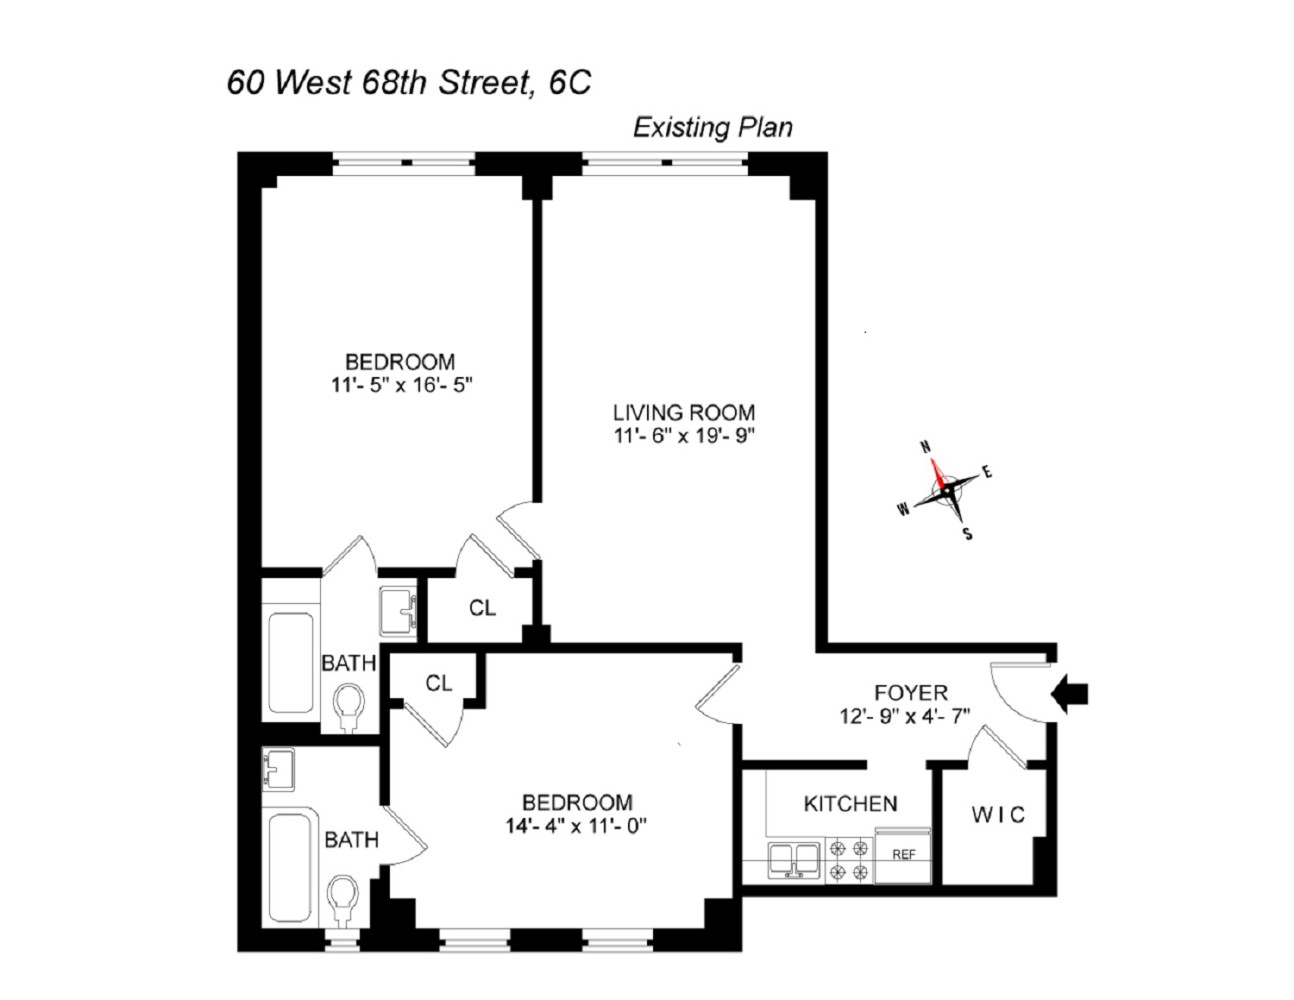 Floorplan for 60 West 68th Street, 6C